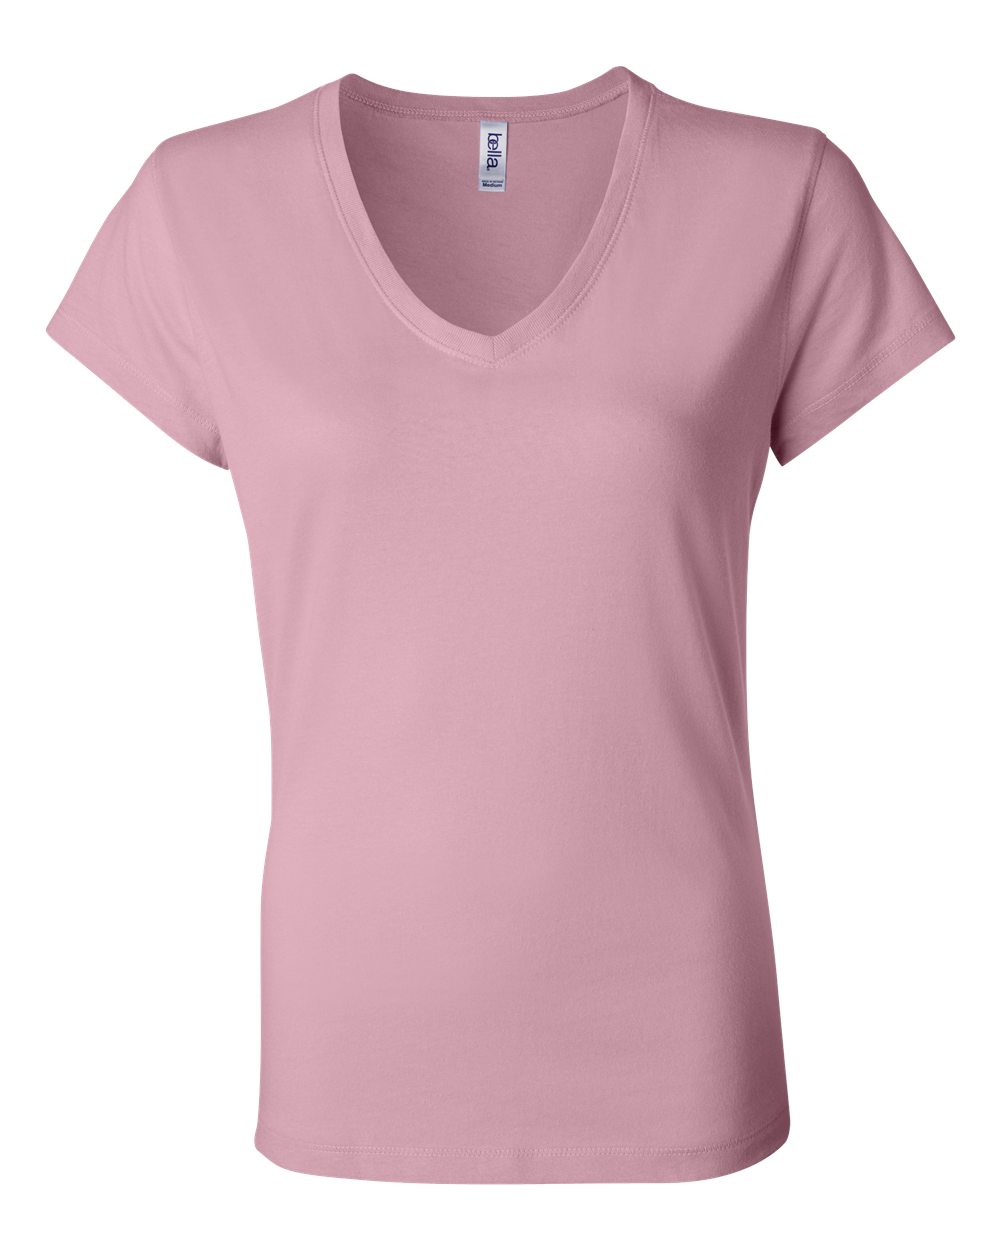 bella 6005 Ladies' Short Sleeve V-Neck T-Shirt $7.99 - T-Shirts